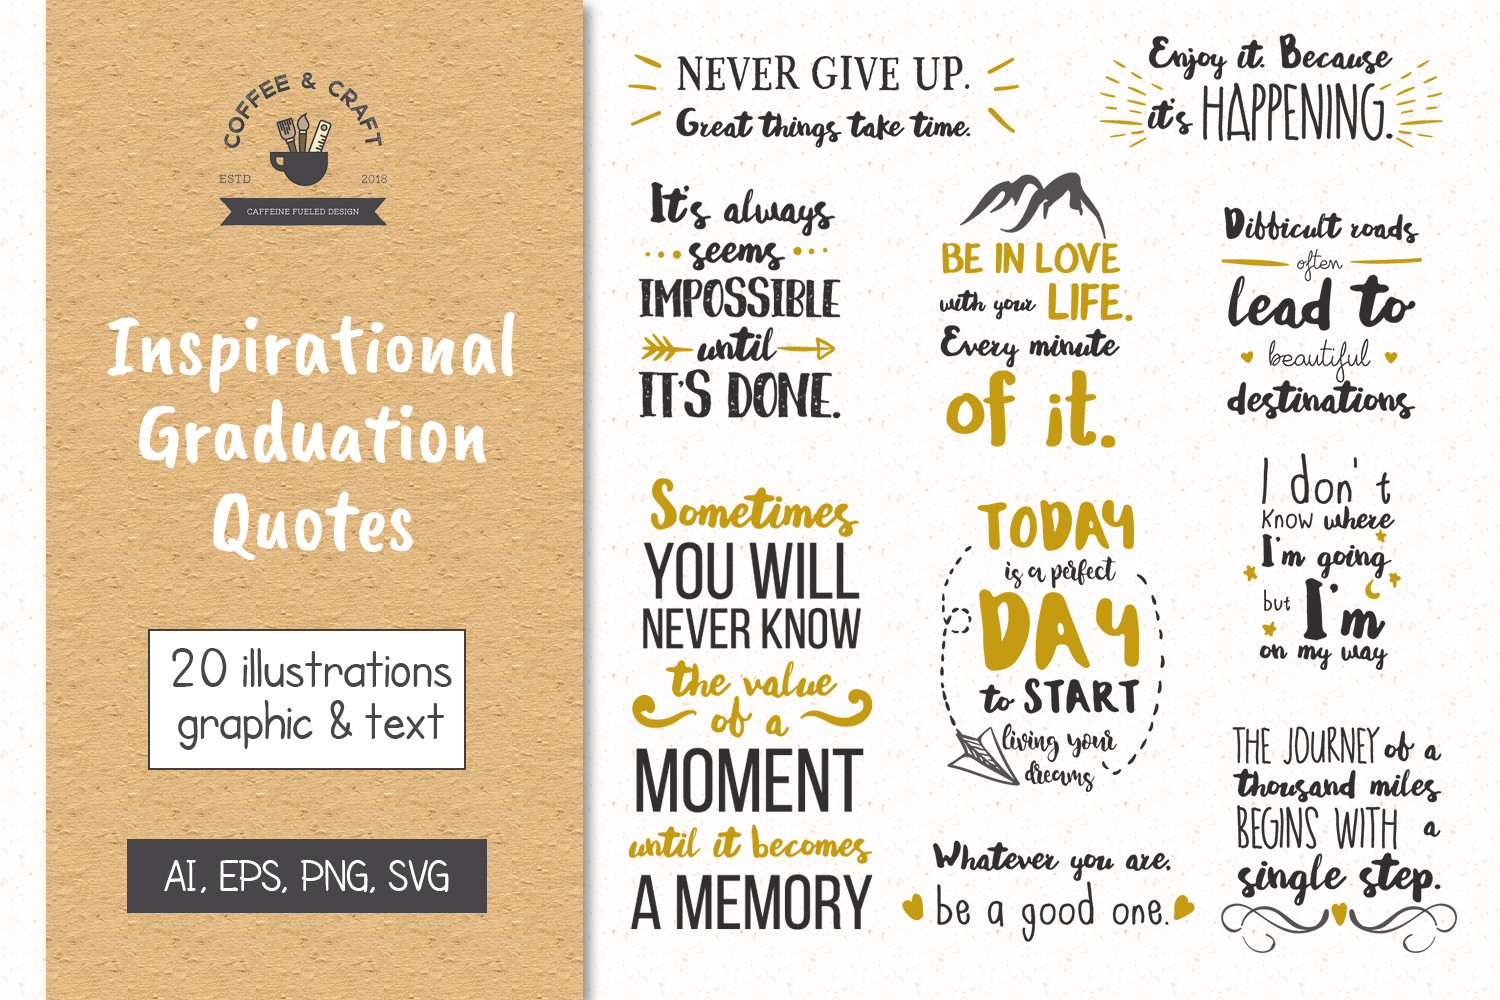 Inspirational Graduation Quotes
 Inspirational Graduation Quotes